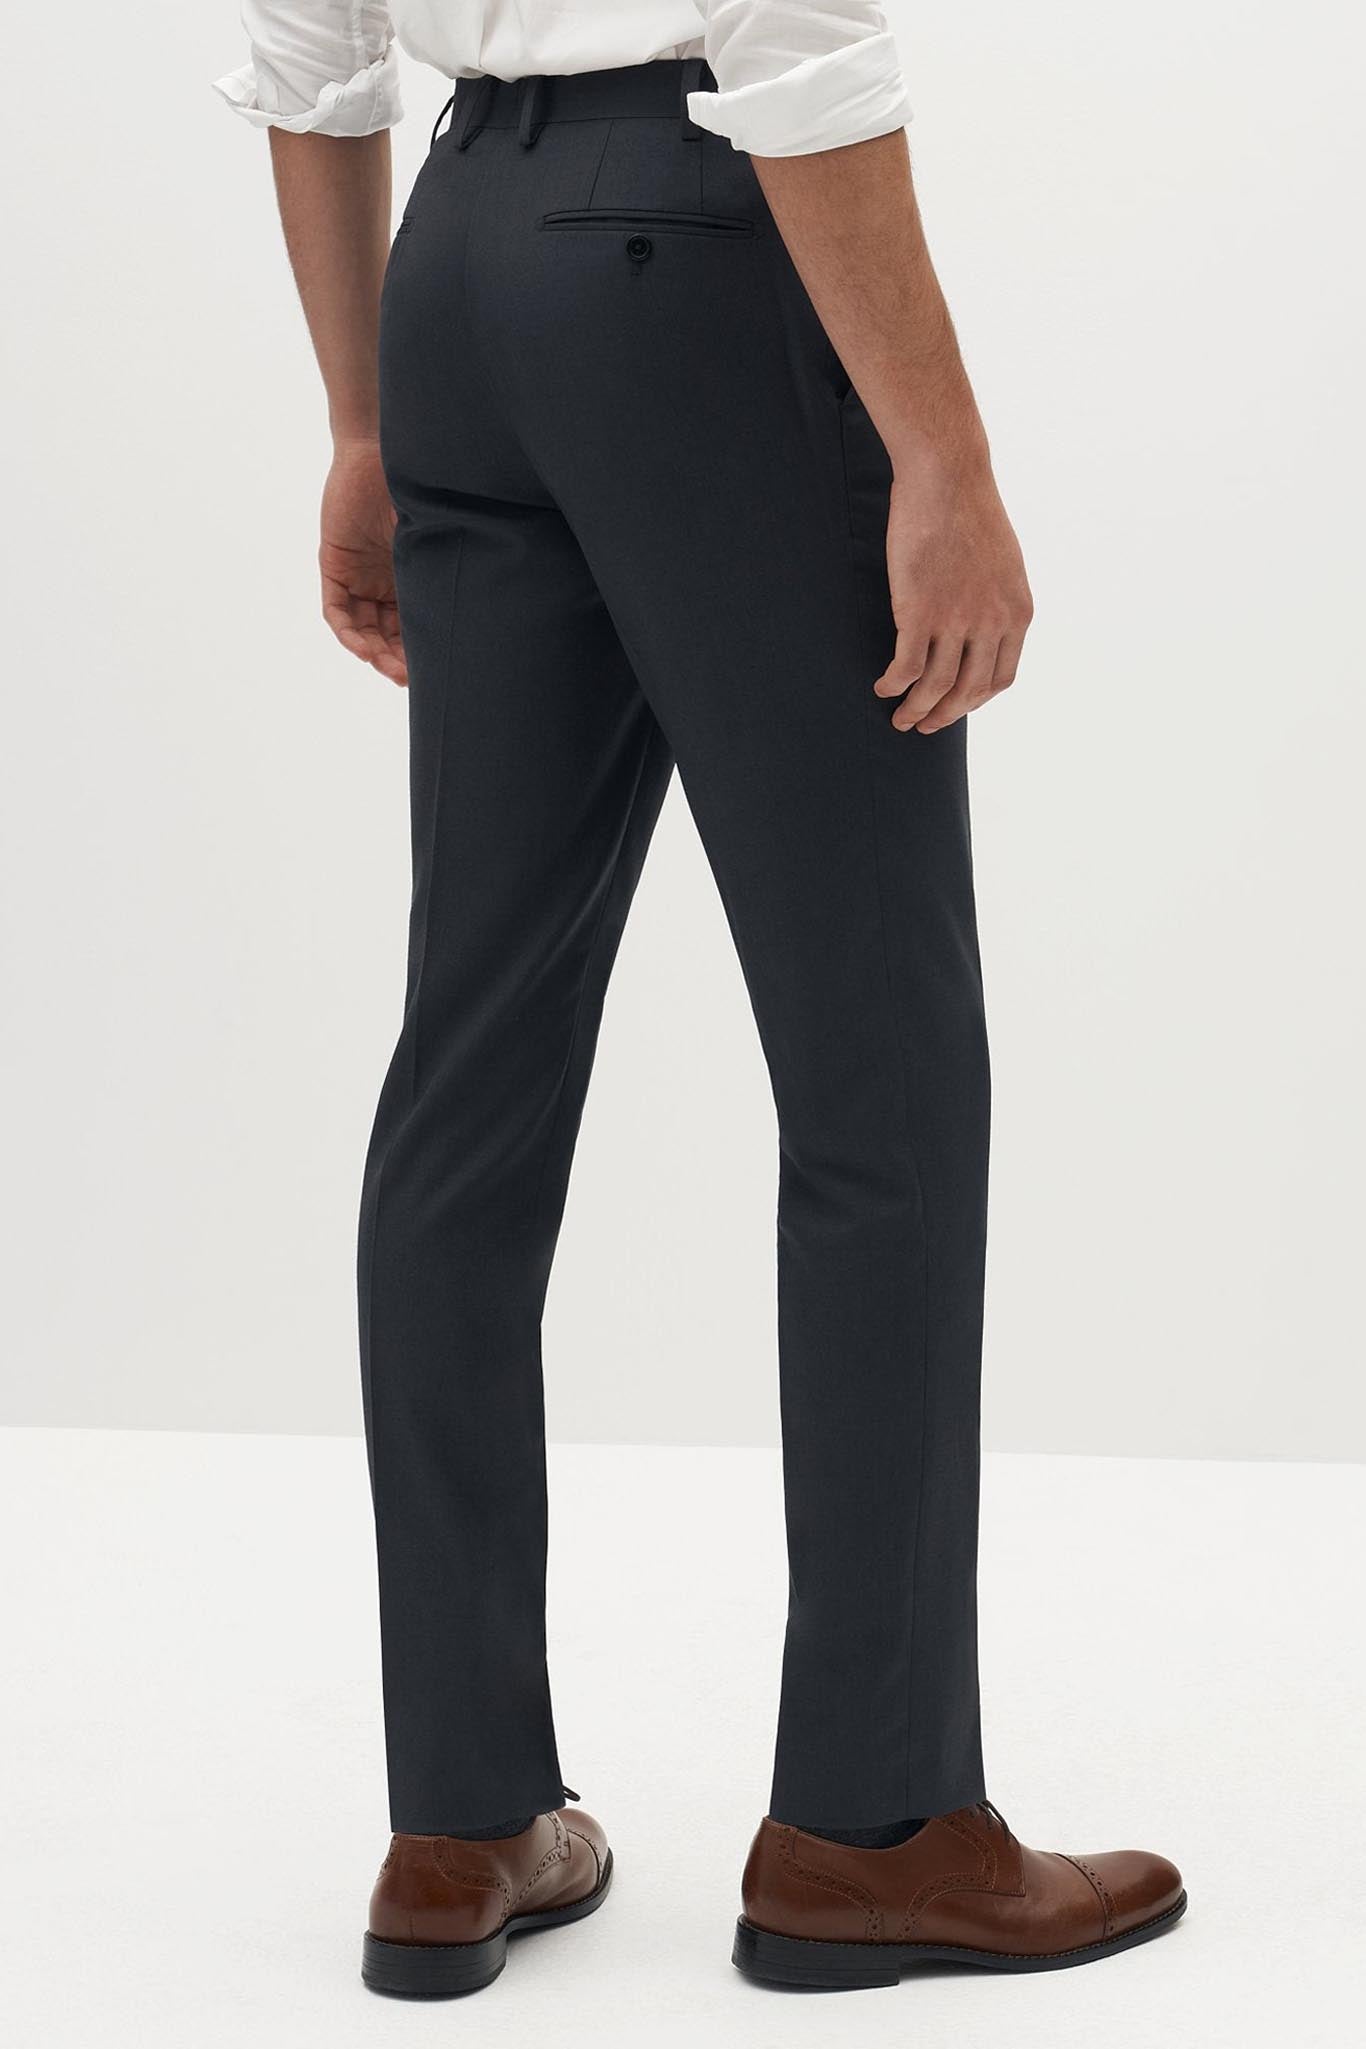 Charcoal Gray Suit Pants by SuitShop